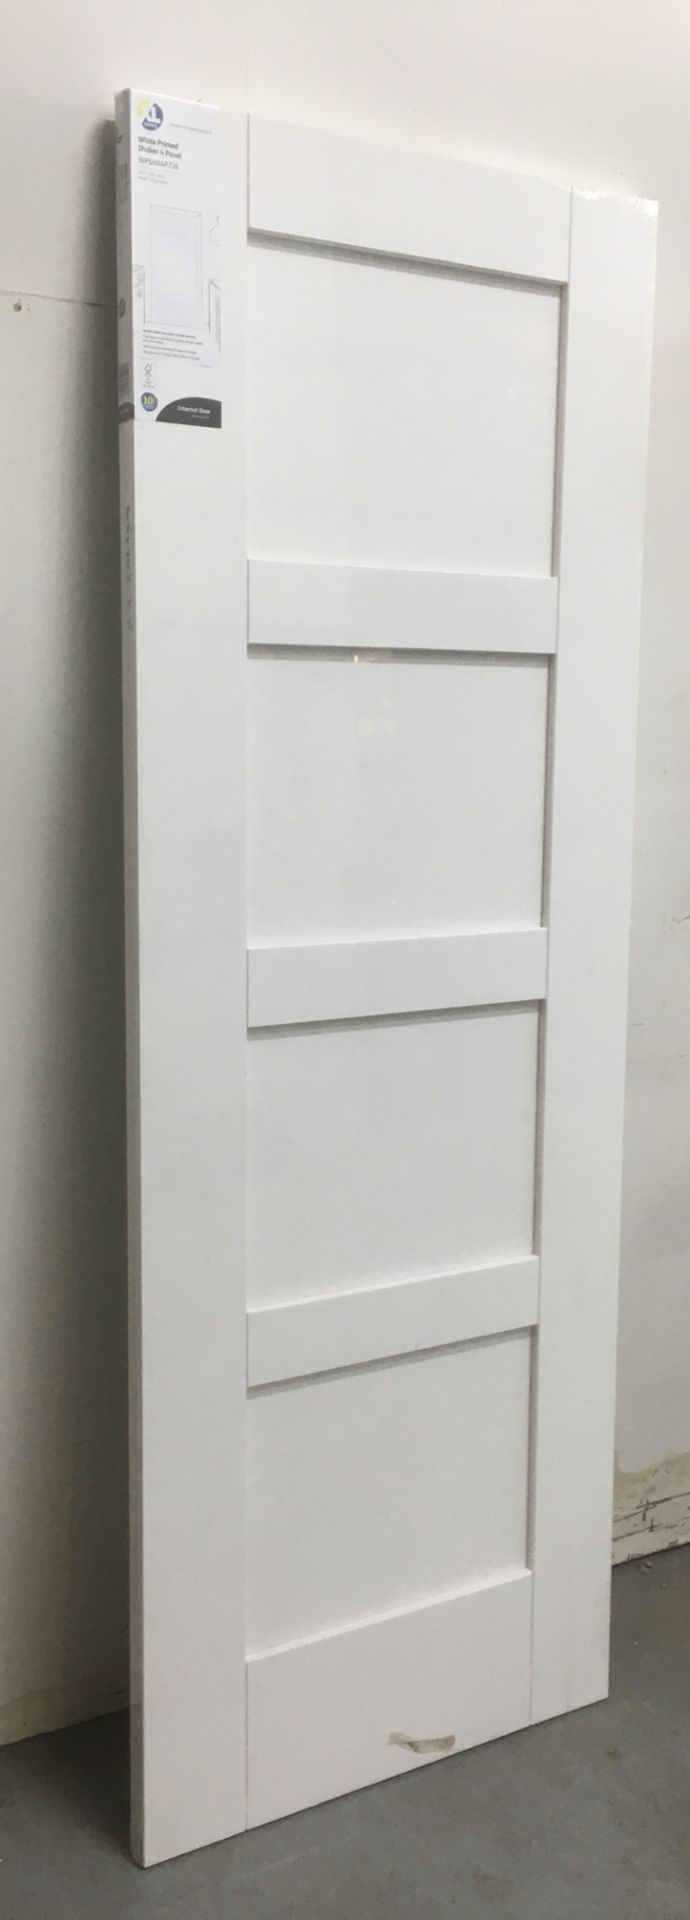 XLJoinery 4 Panel White Primed Shaker Interior Door | WPSHA4P726 | 2040mm x 726mm x 40mm - Image 2 of 4